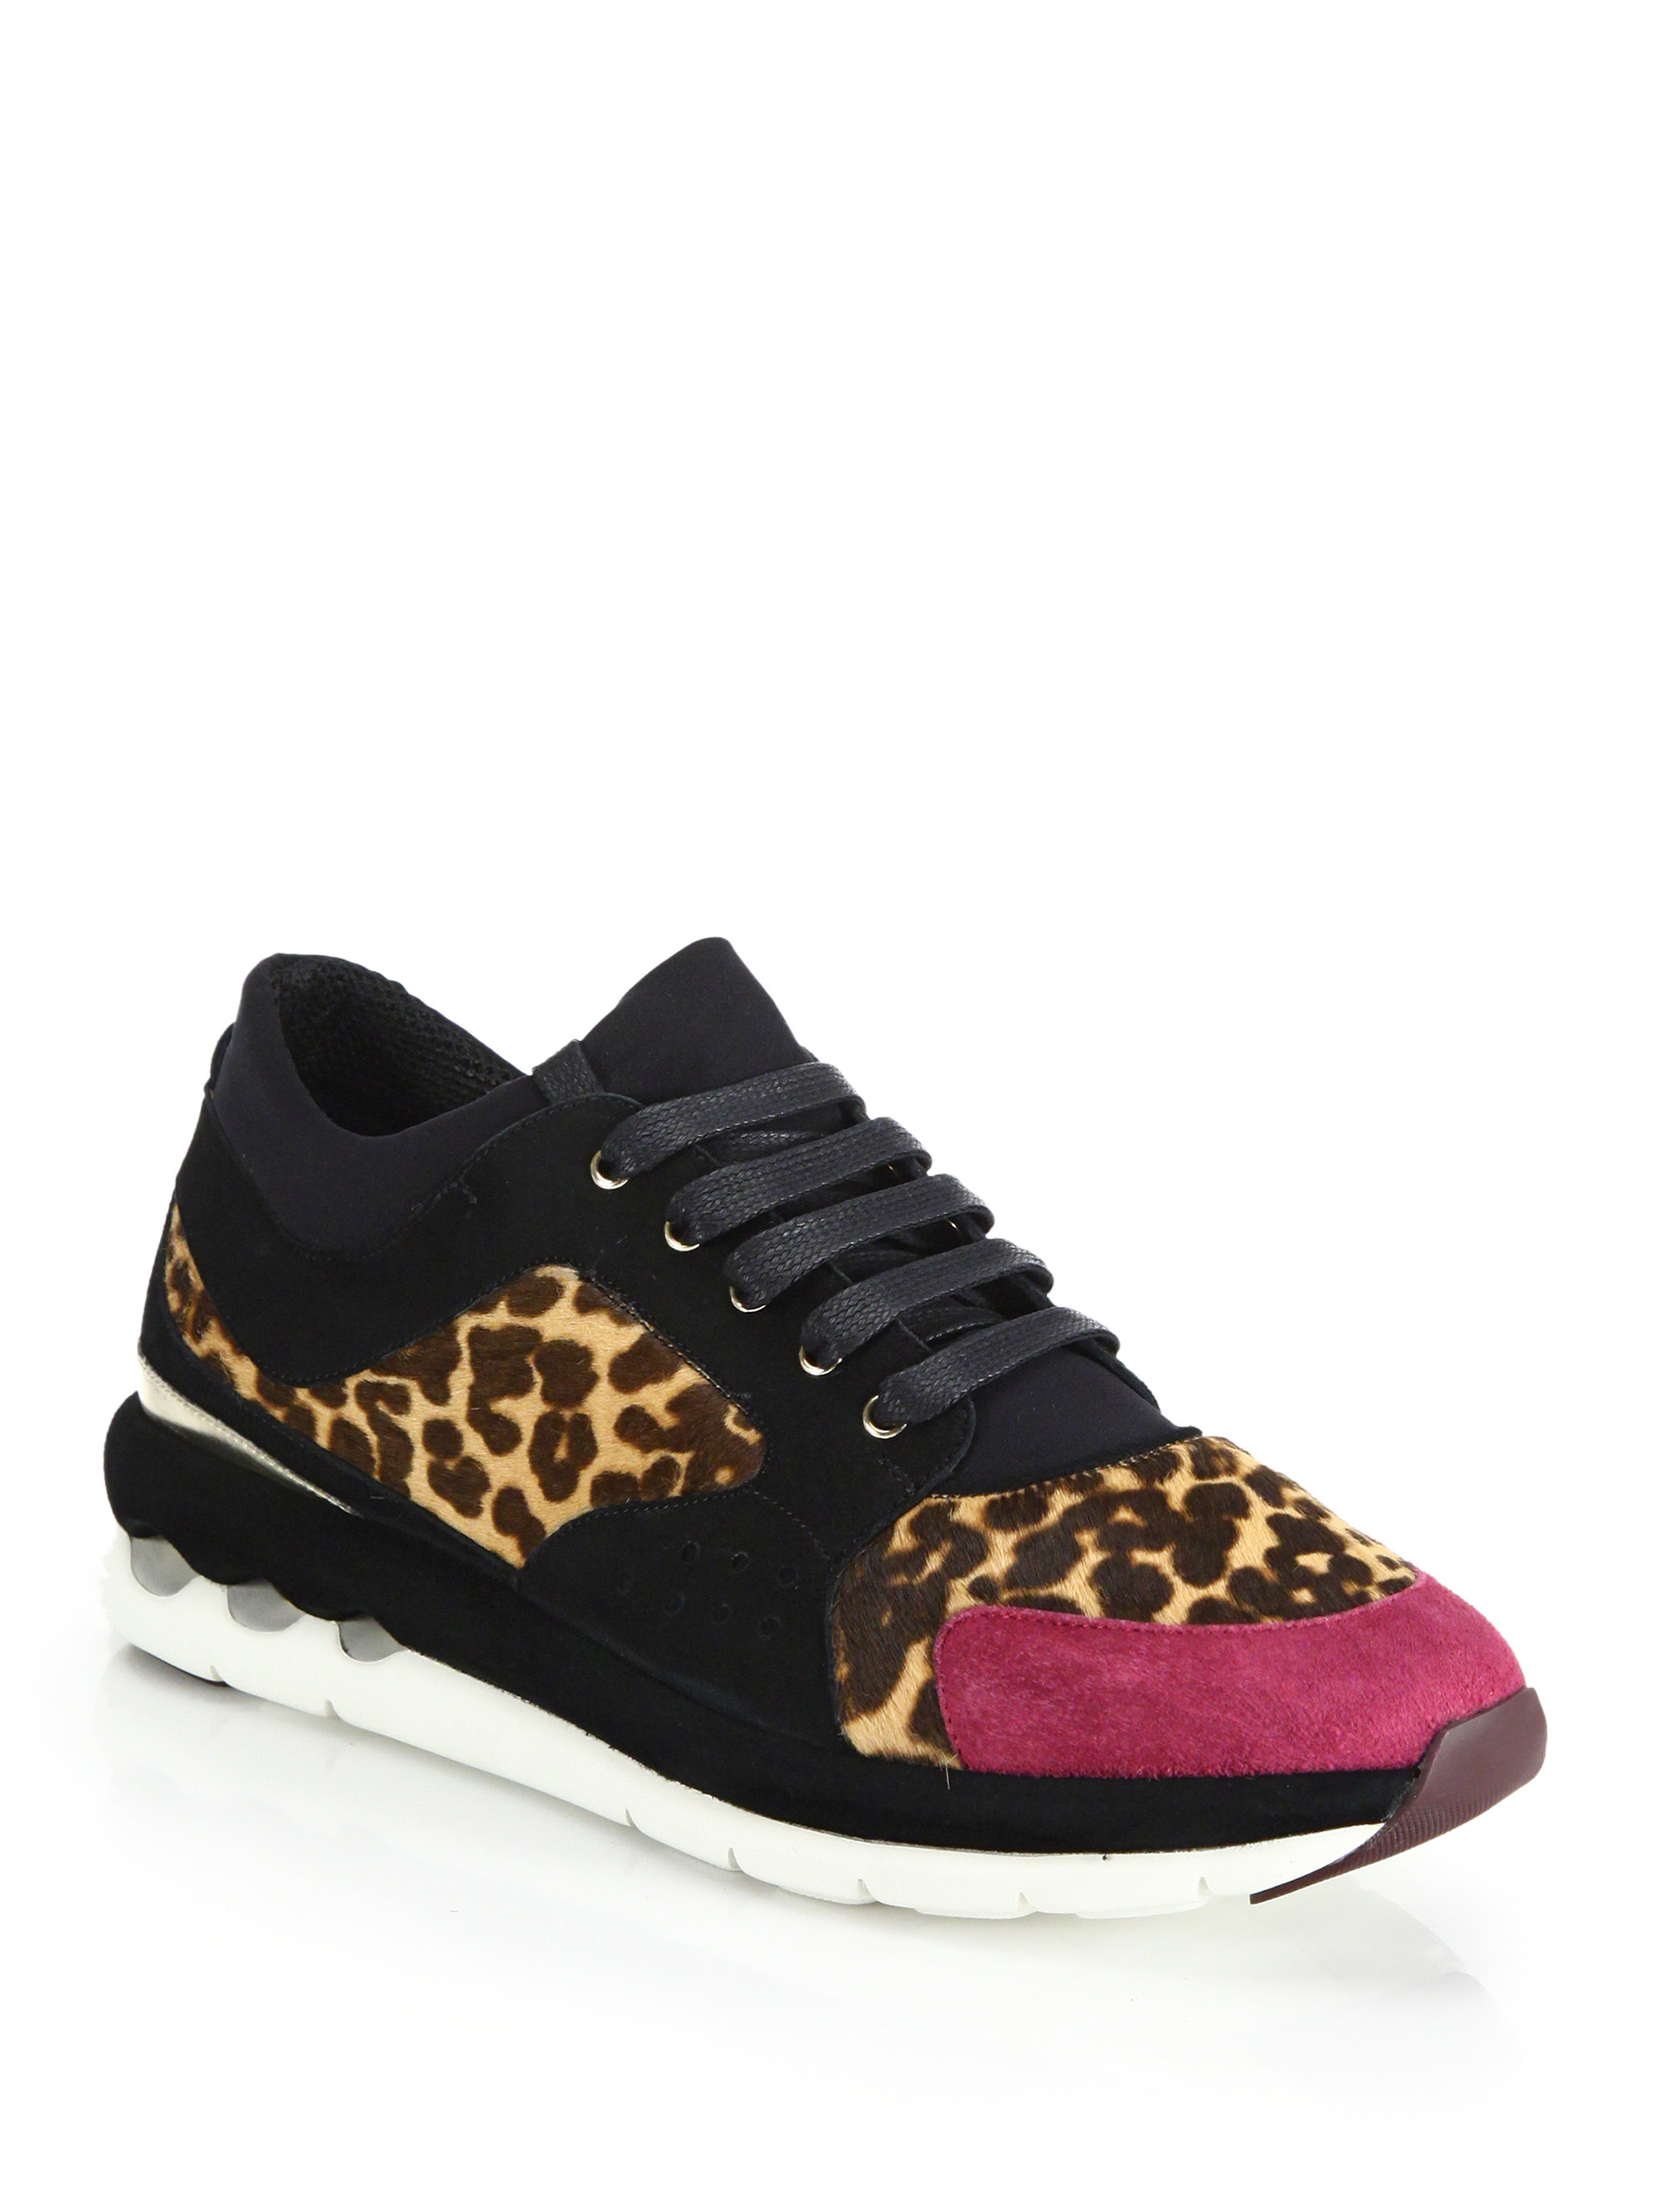 Lyst - Ferragamo Lisel Suede & Leopard-print Calf Hair Sneakers